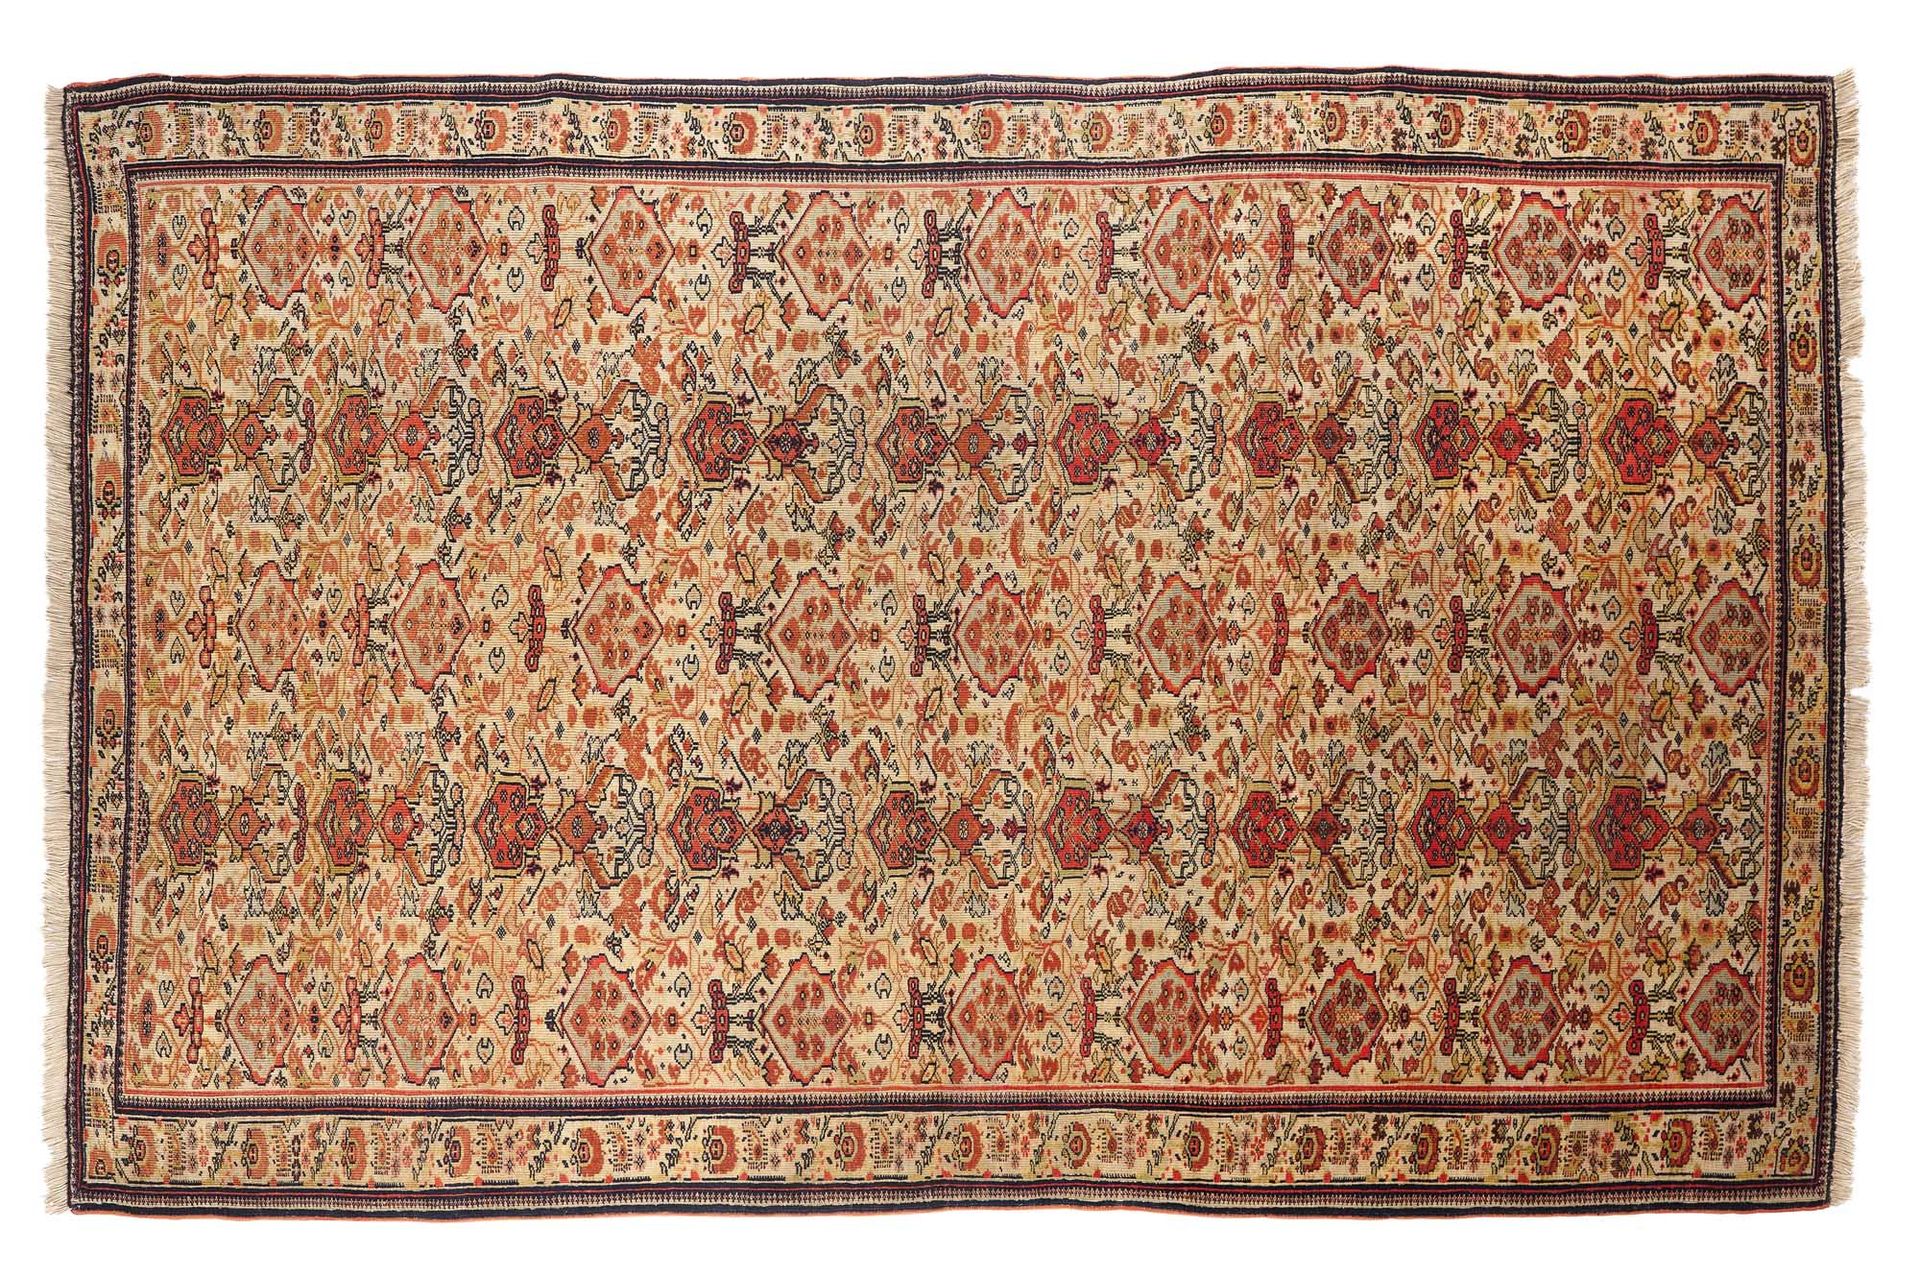 Null Tapis MELAYER Zili-Sultan (Perse) fin du 19e siècle

Dimensions : 188 x 119&hellip;